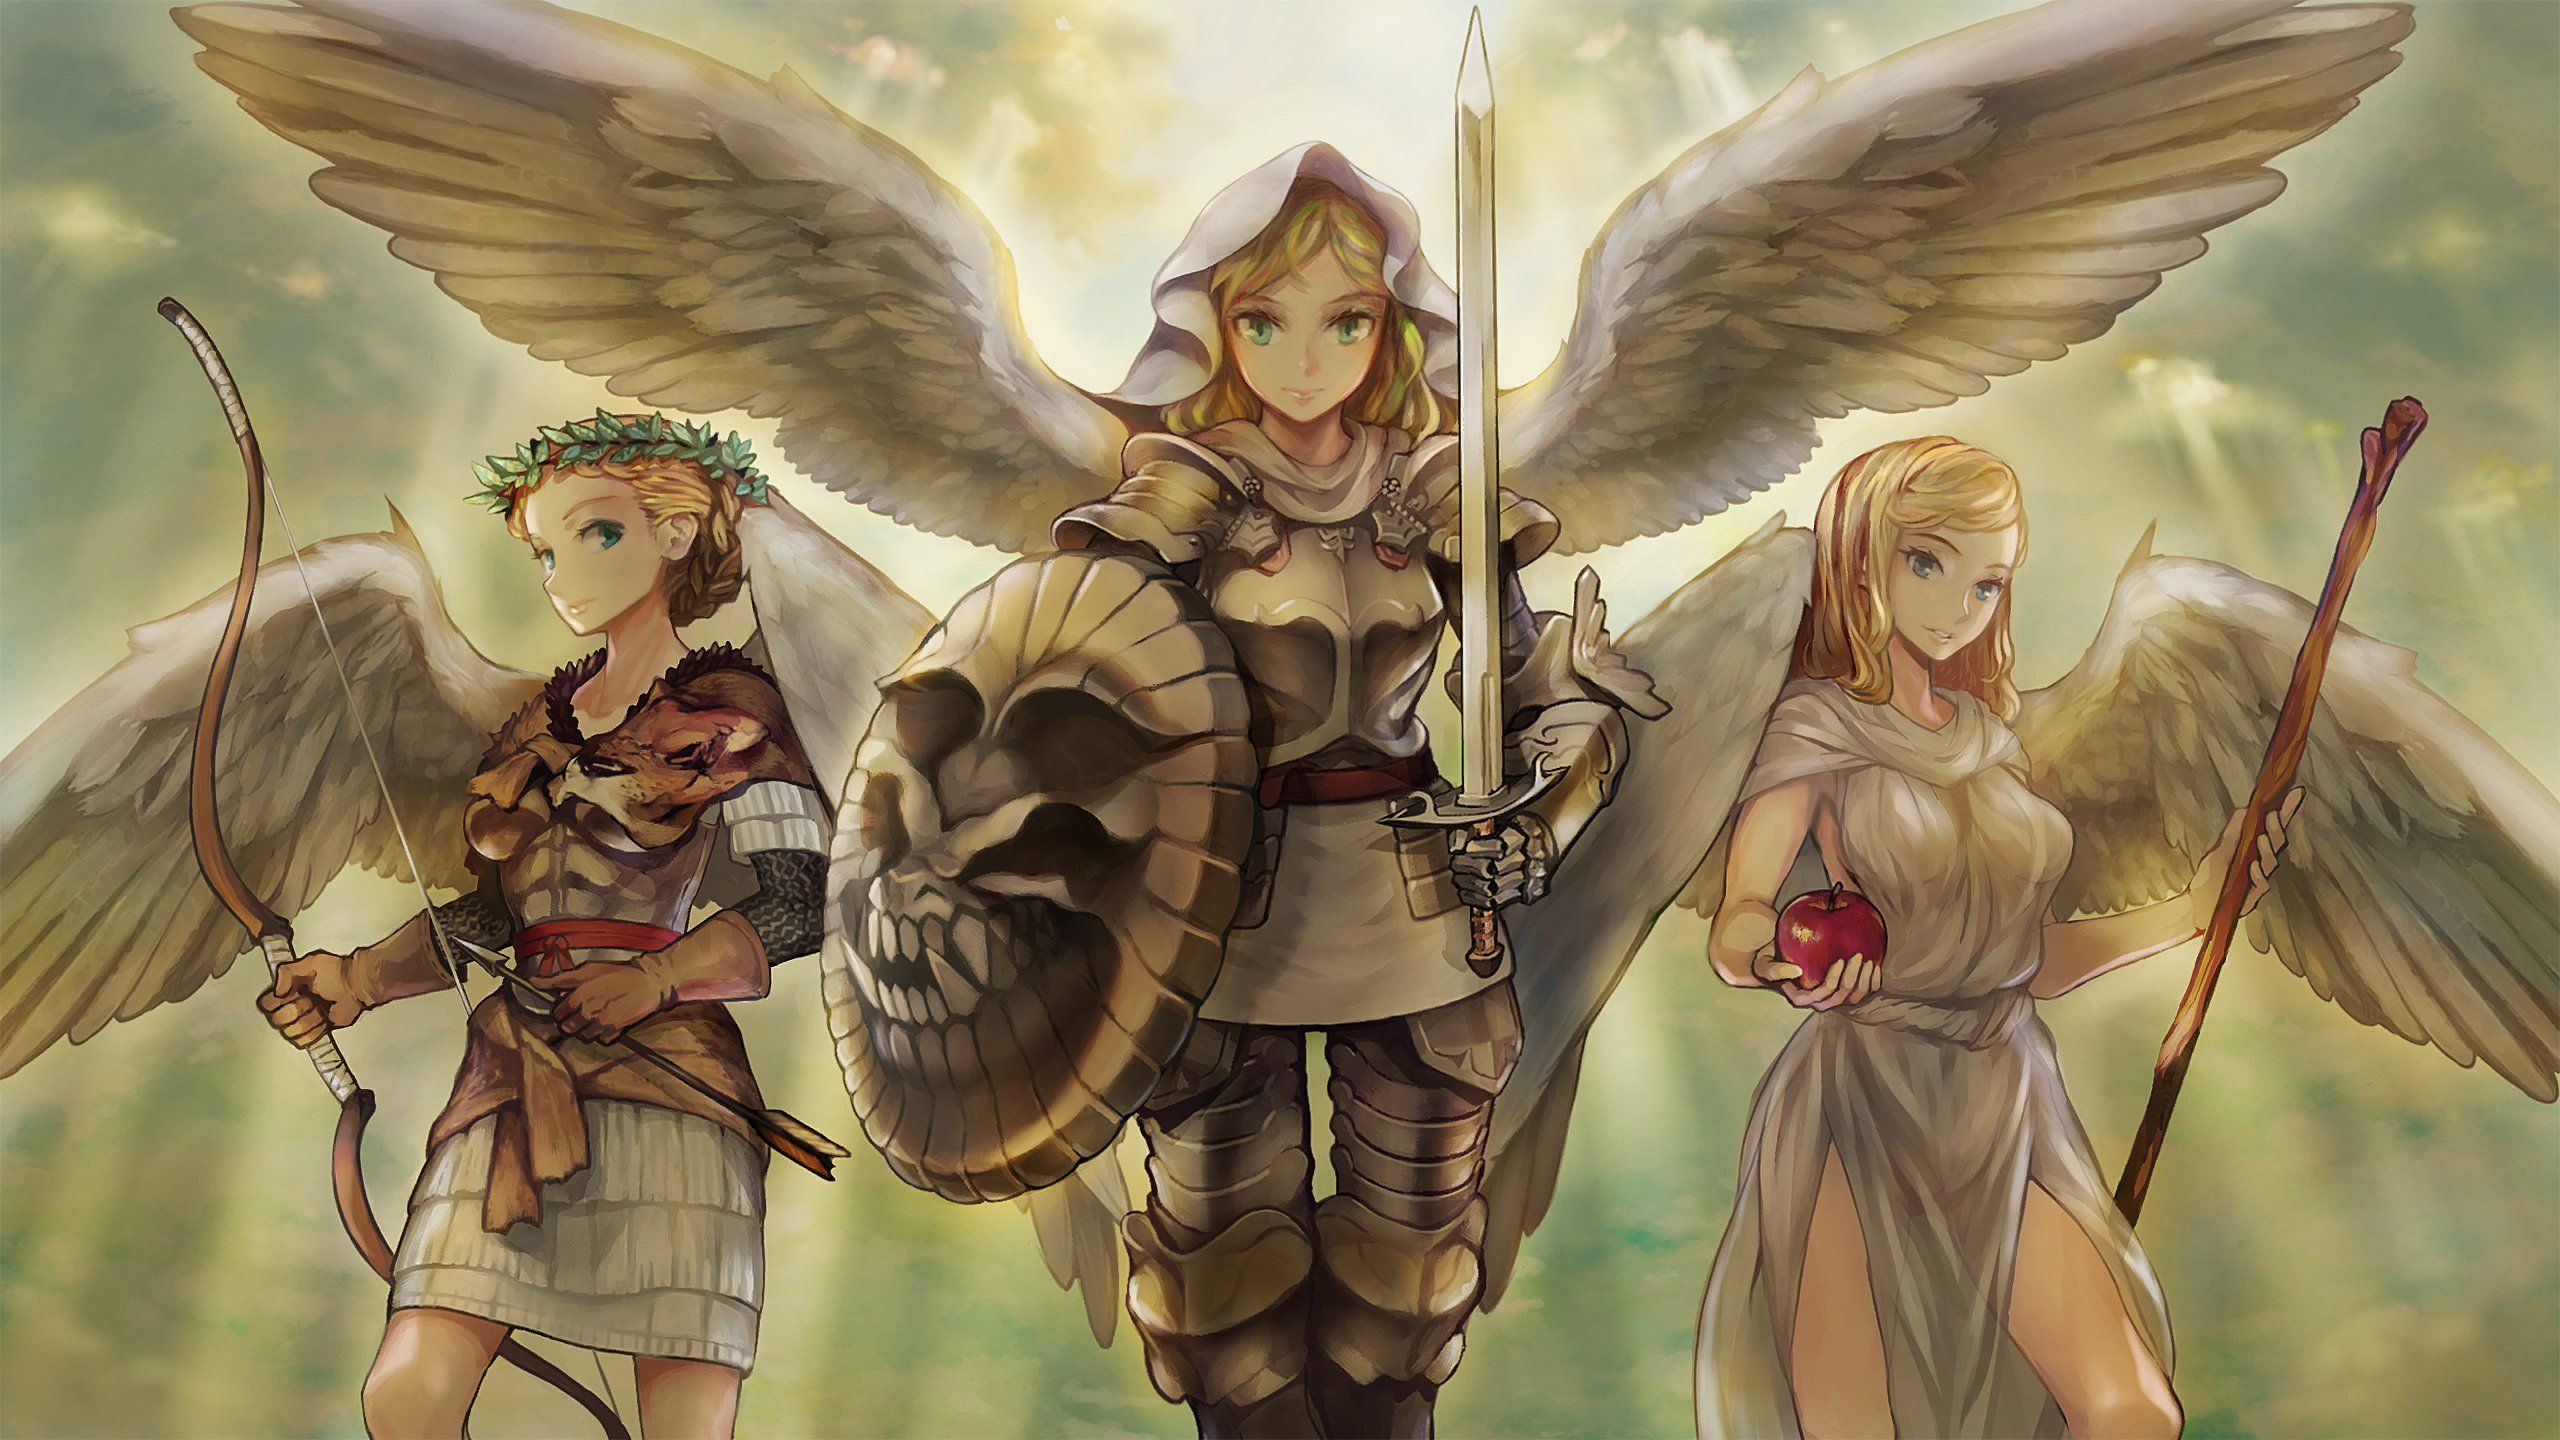 Twitter | Fantasy character design, Character design, Anime character design